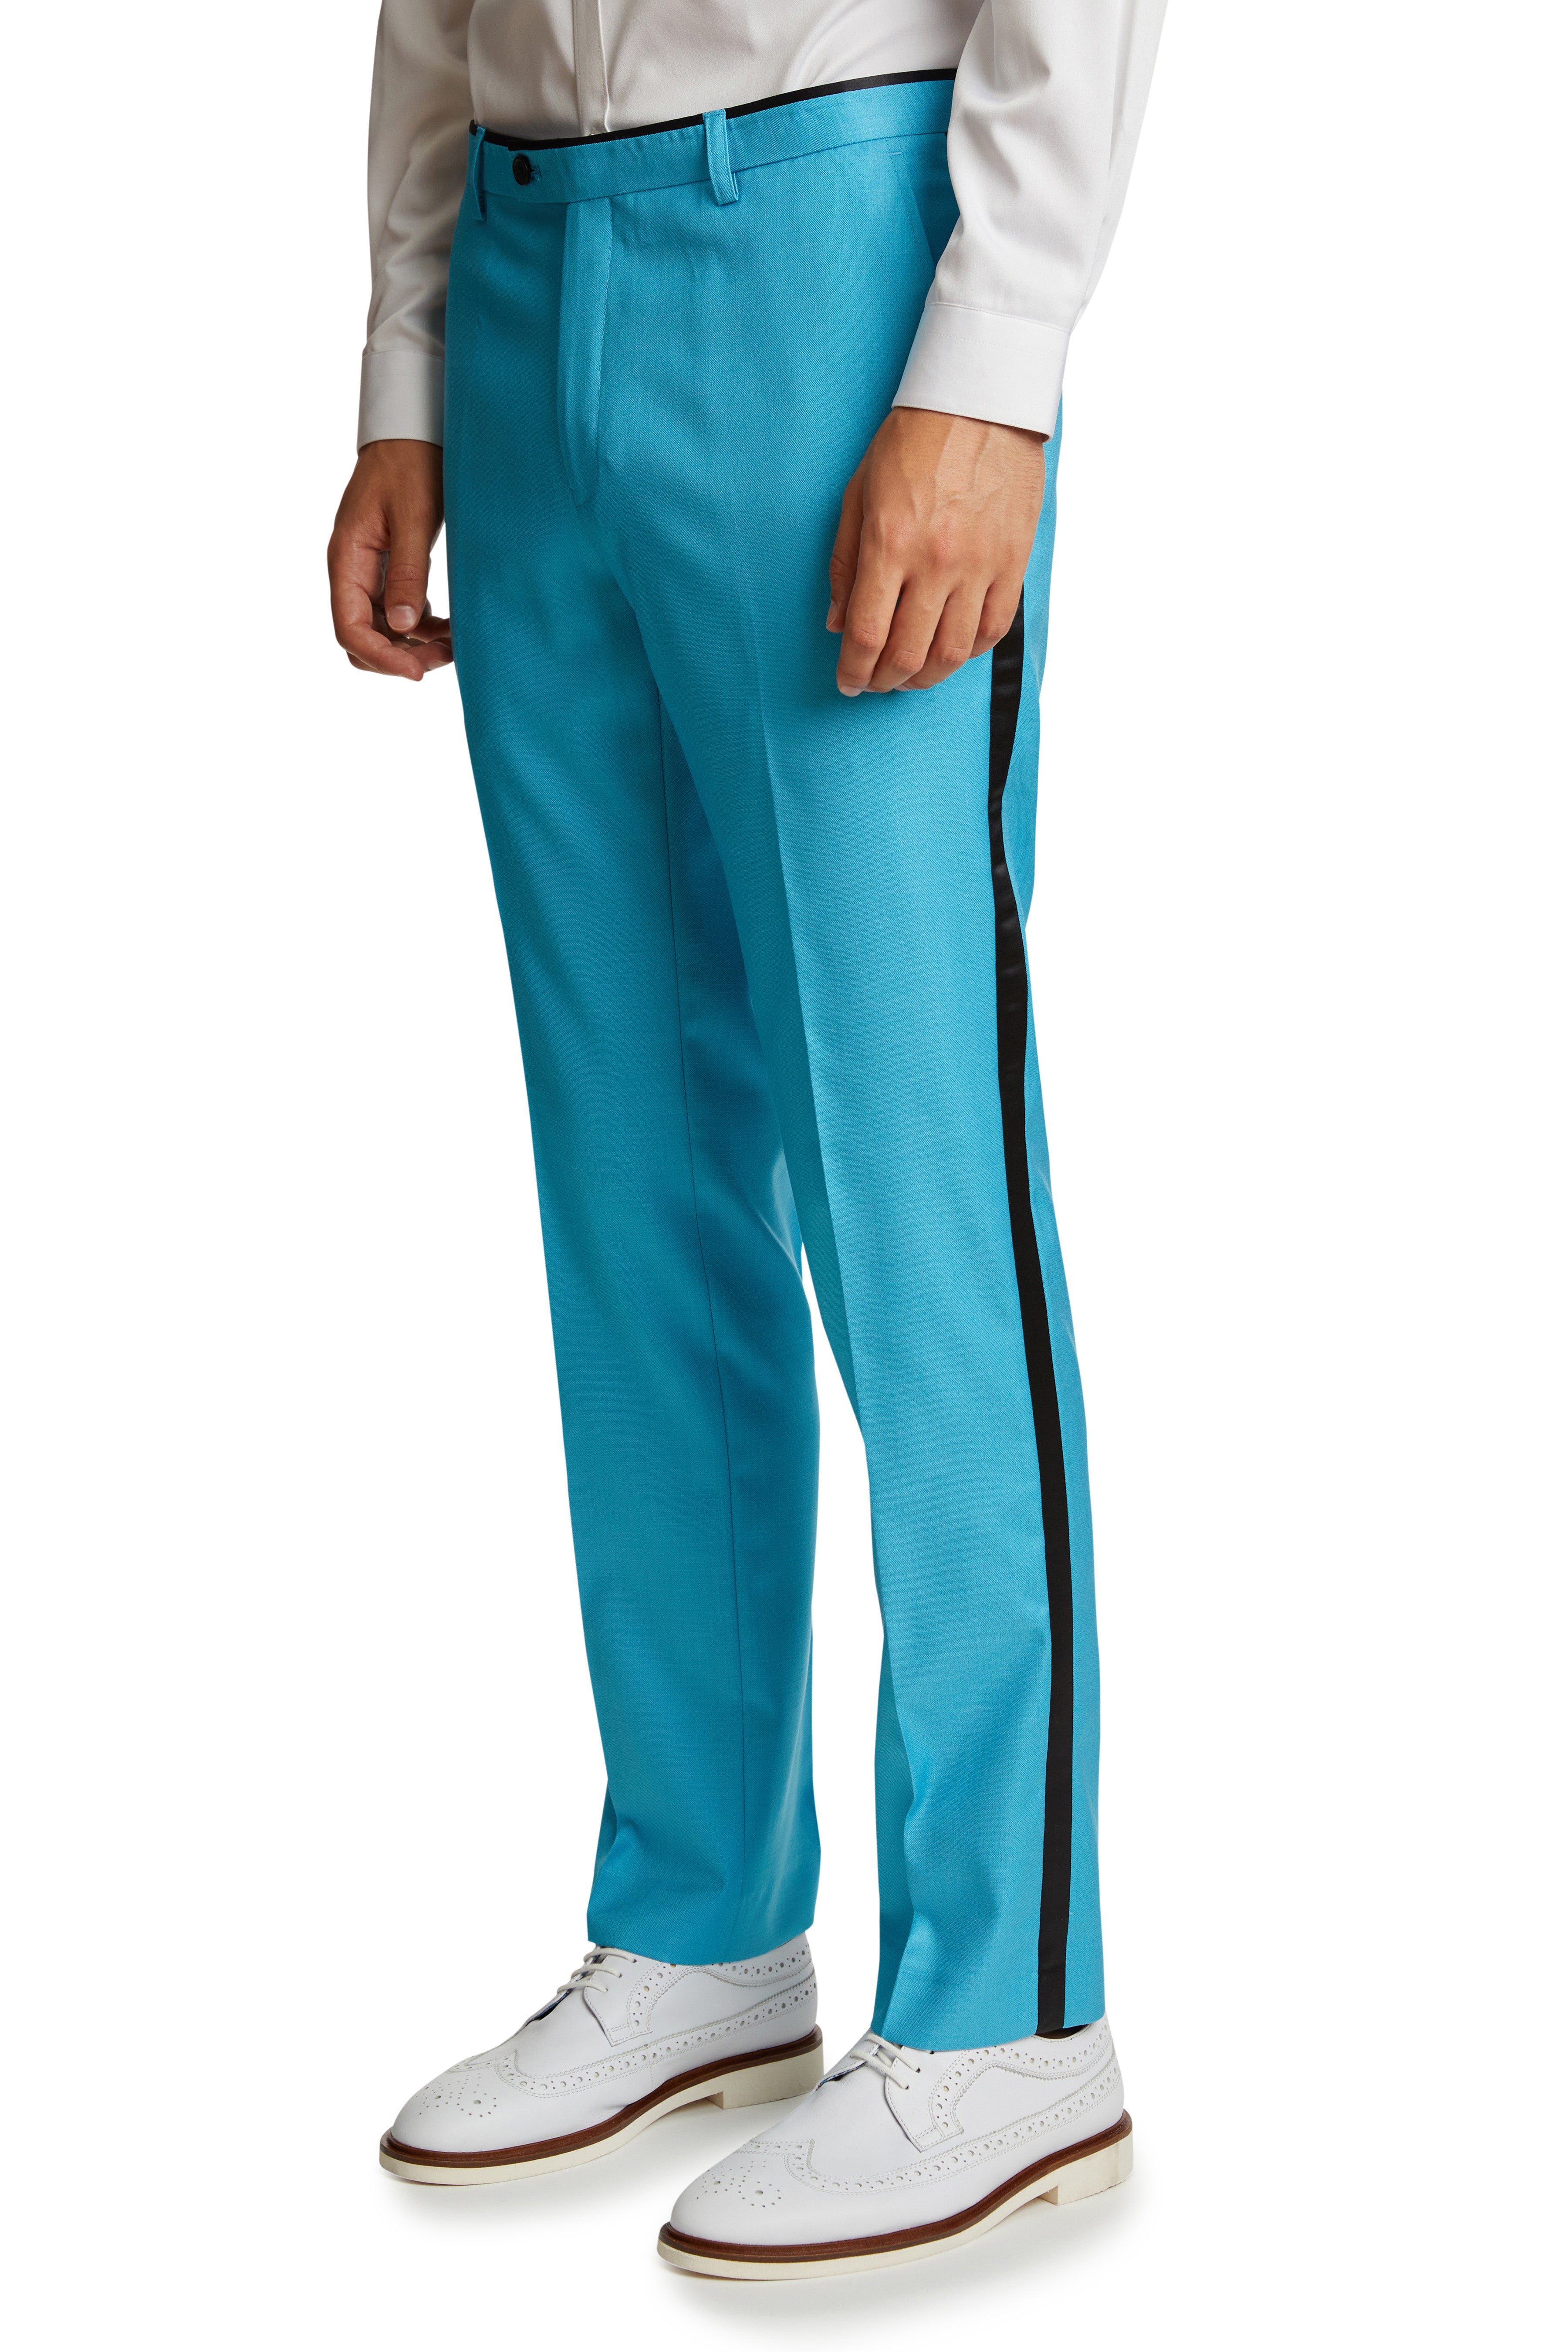 Sloane Tux Pants - slim - Turquoise